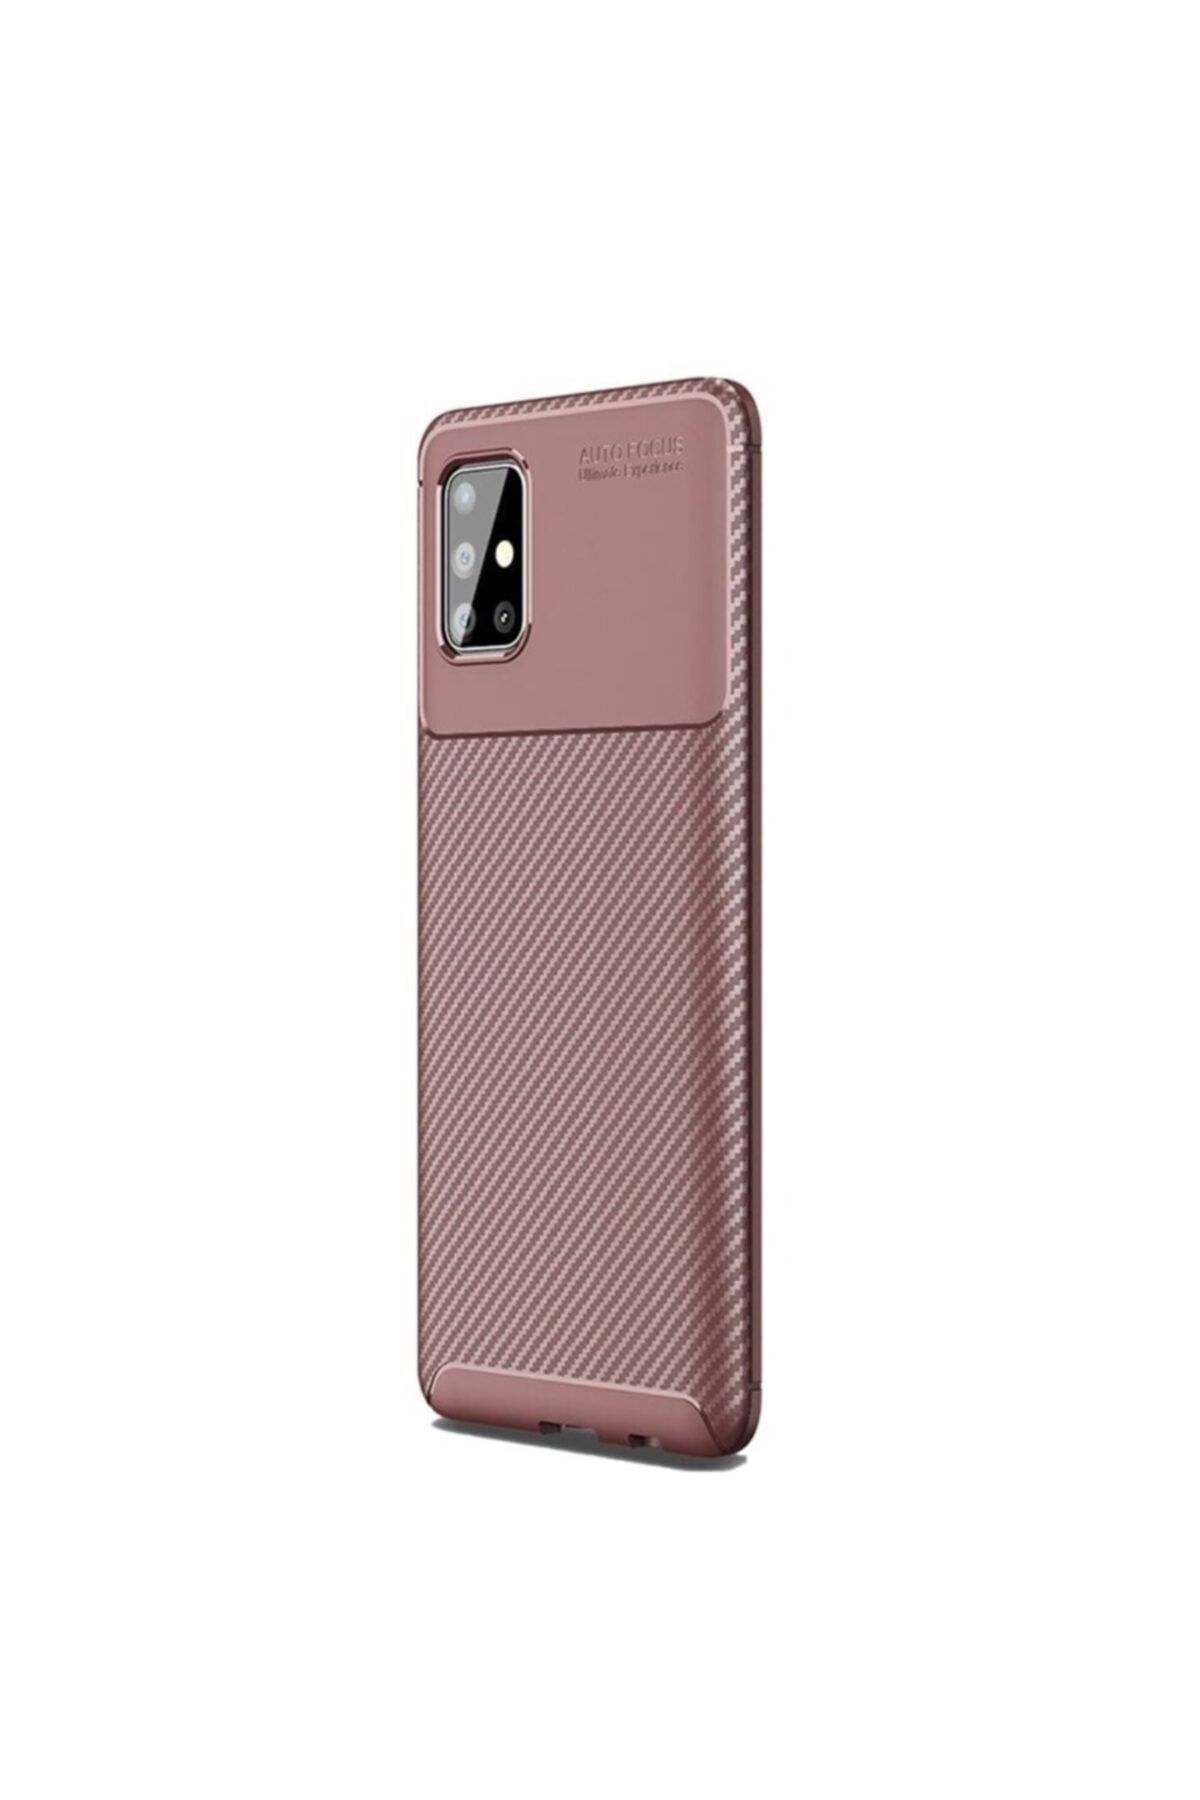 Happyshop Samsung Galaxy A31 Kılıf Karbon Desenli Lux Negro Silikon+cam Ekran Koruyucu